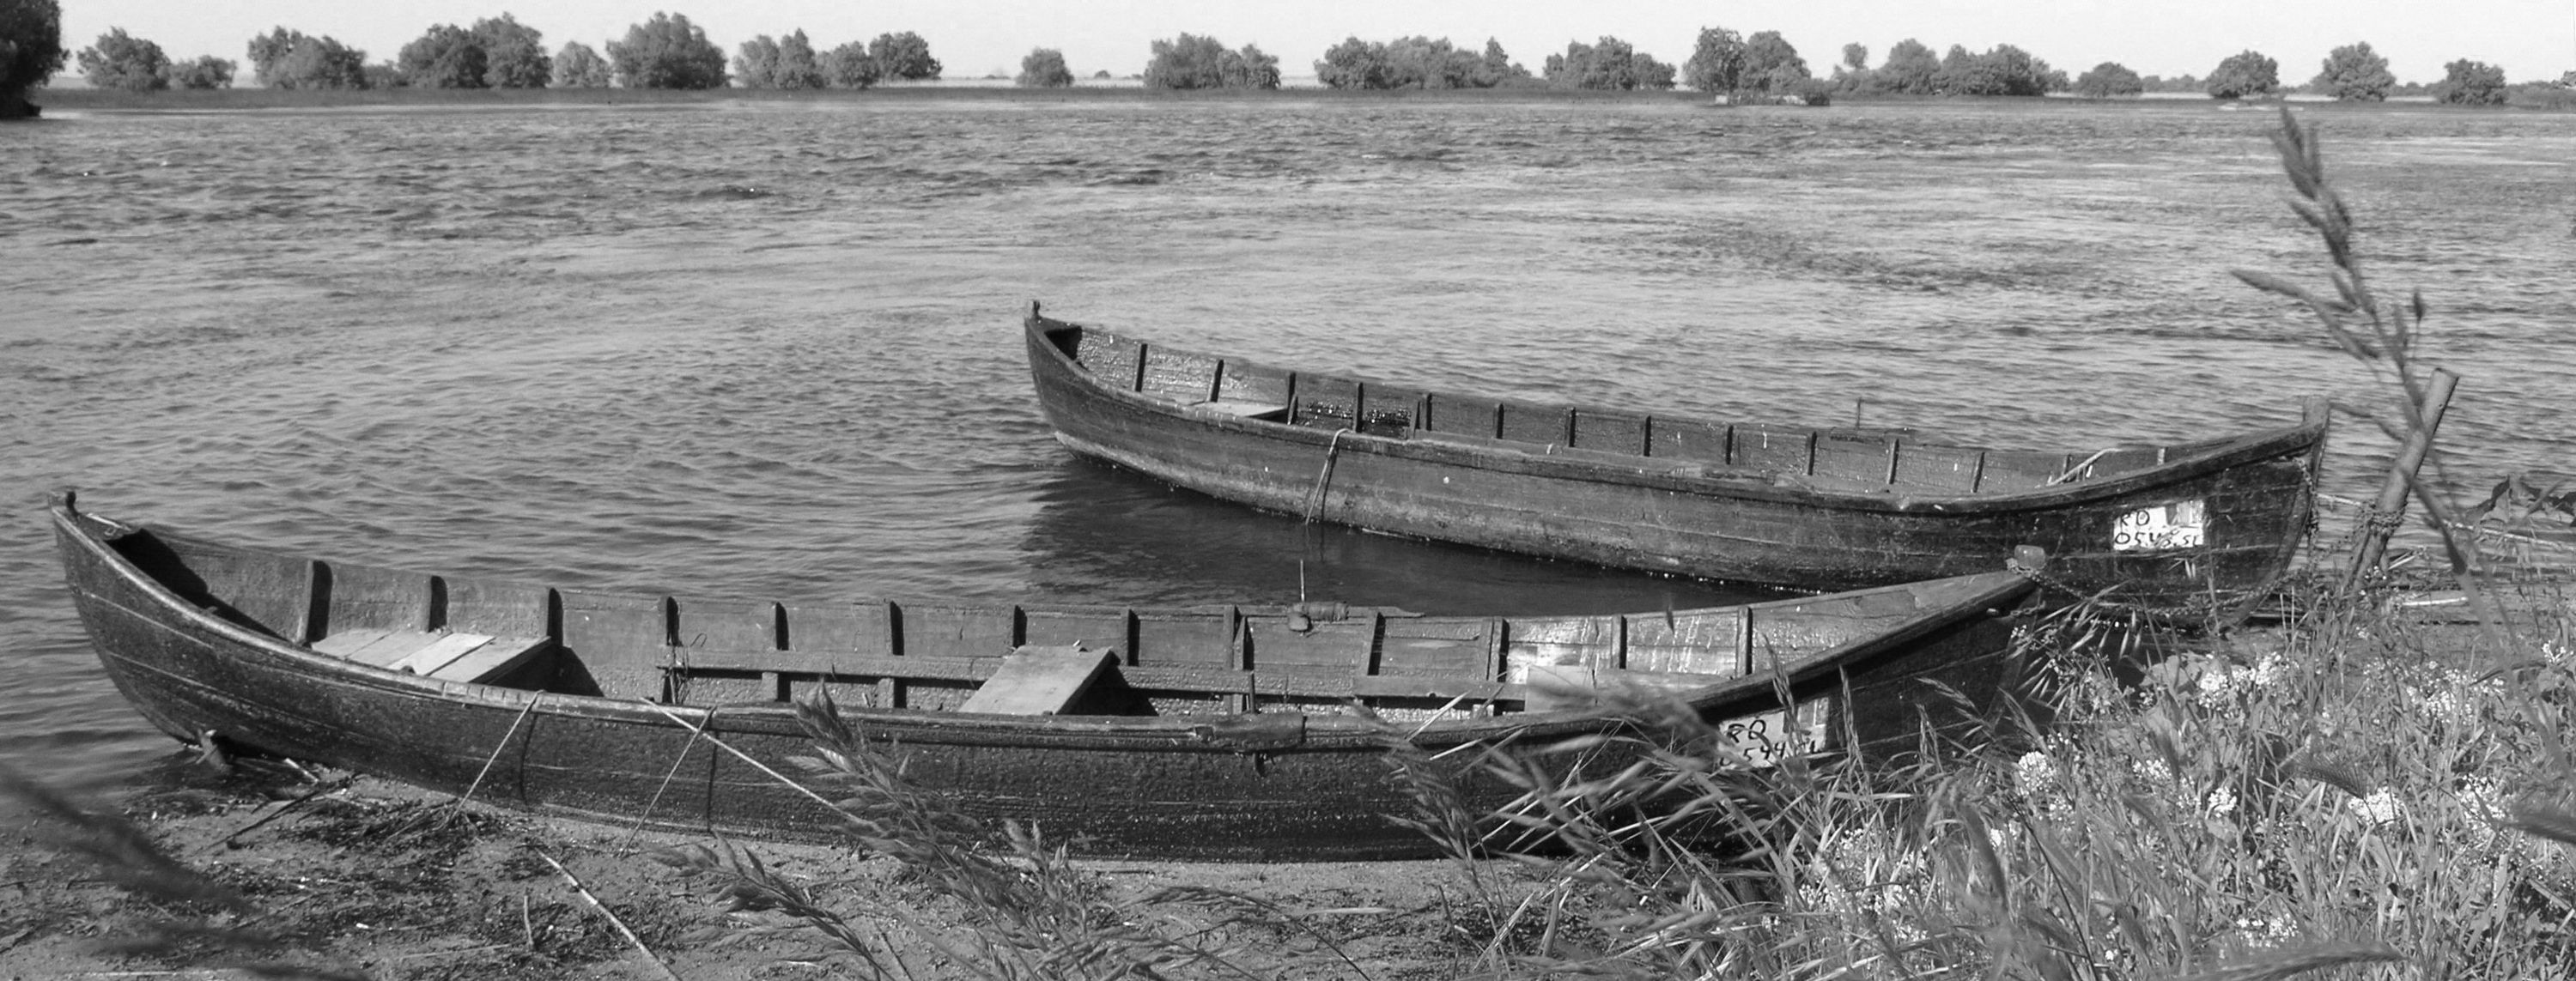 traditional fisher boats in Romania in the Danube Delta near the village Mila in 2005